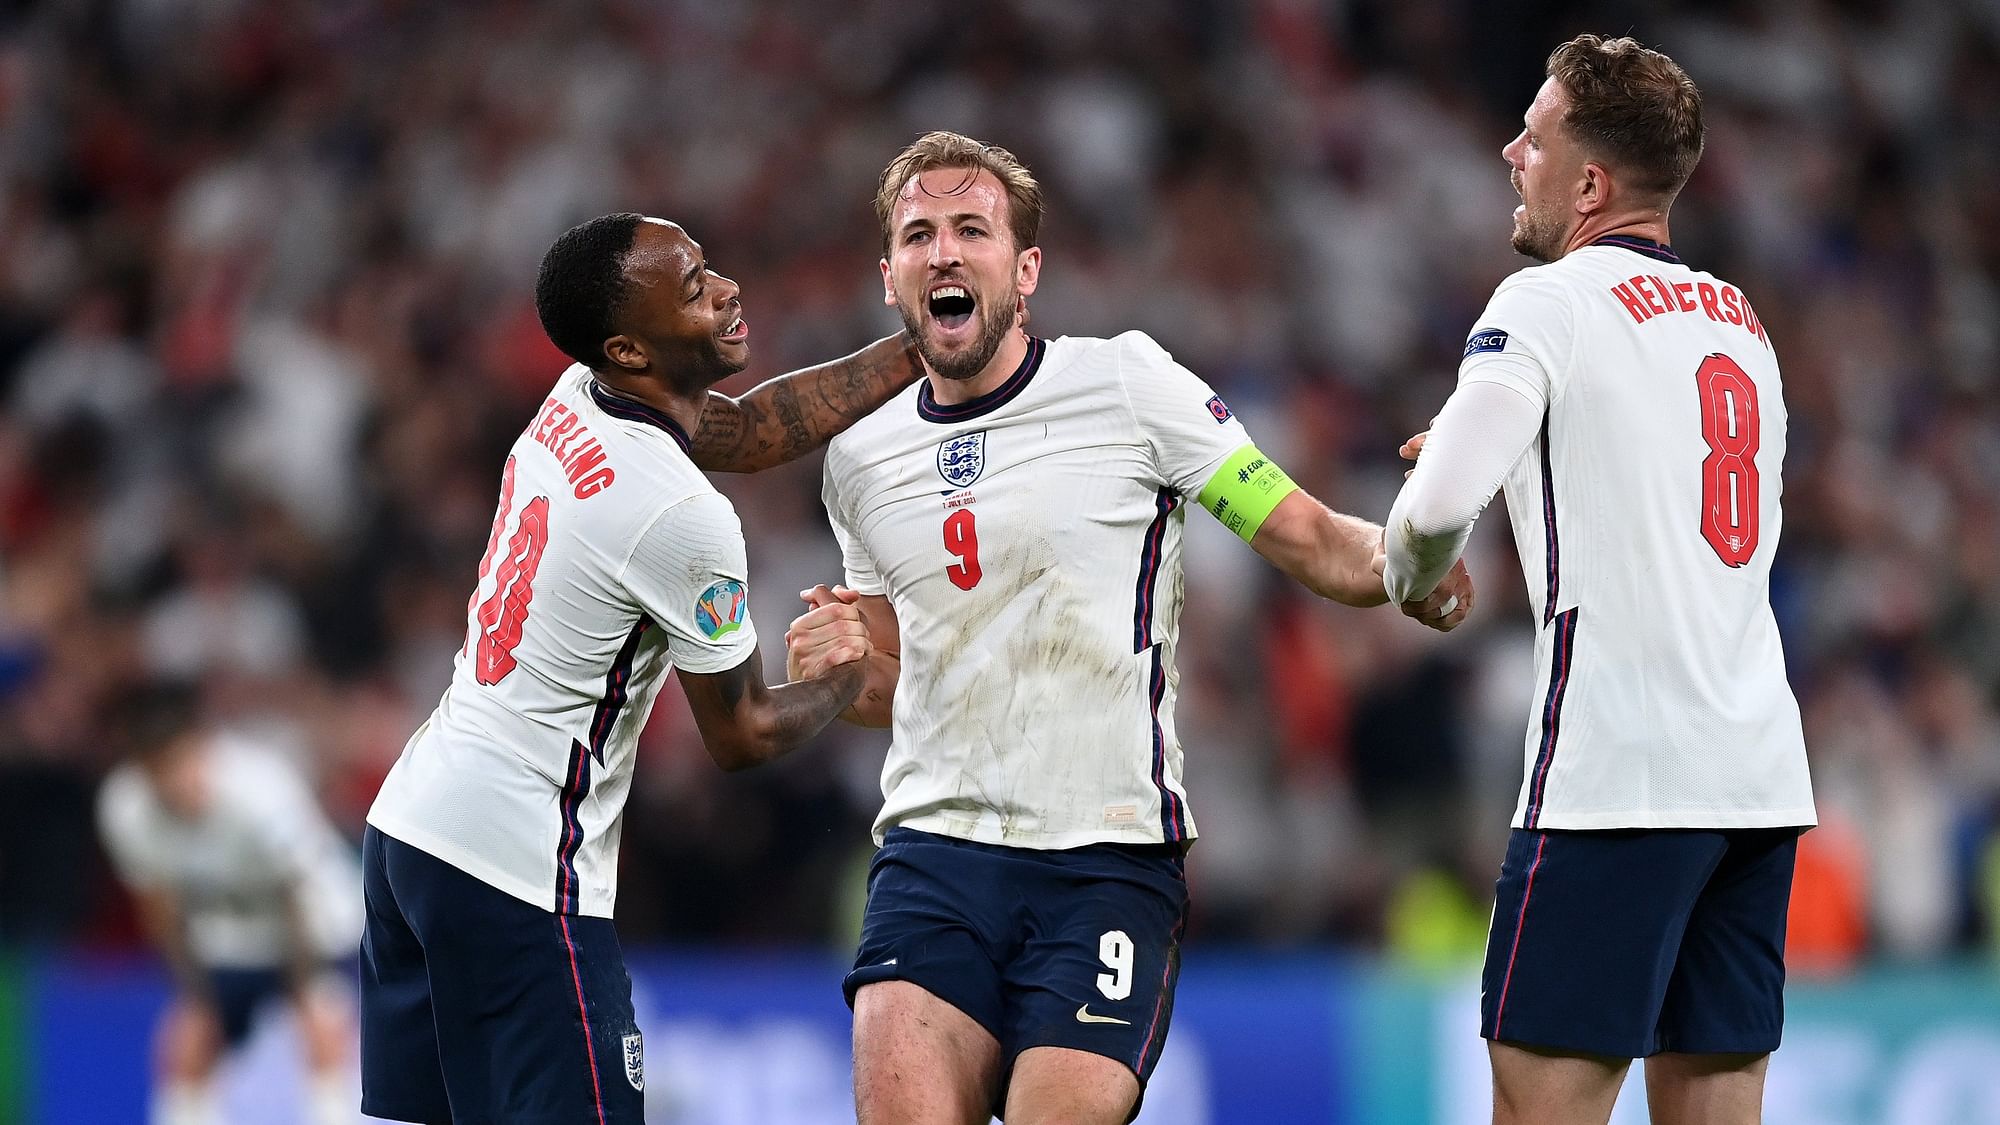 <div class="paragraphs"><p>Harry Kane celebrates scoring against Denmark in the 2020 Euro semi-final at Wembley.&nbsp;</p></div>